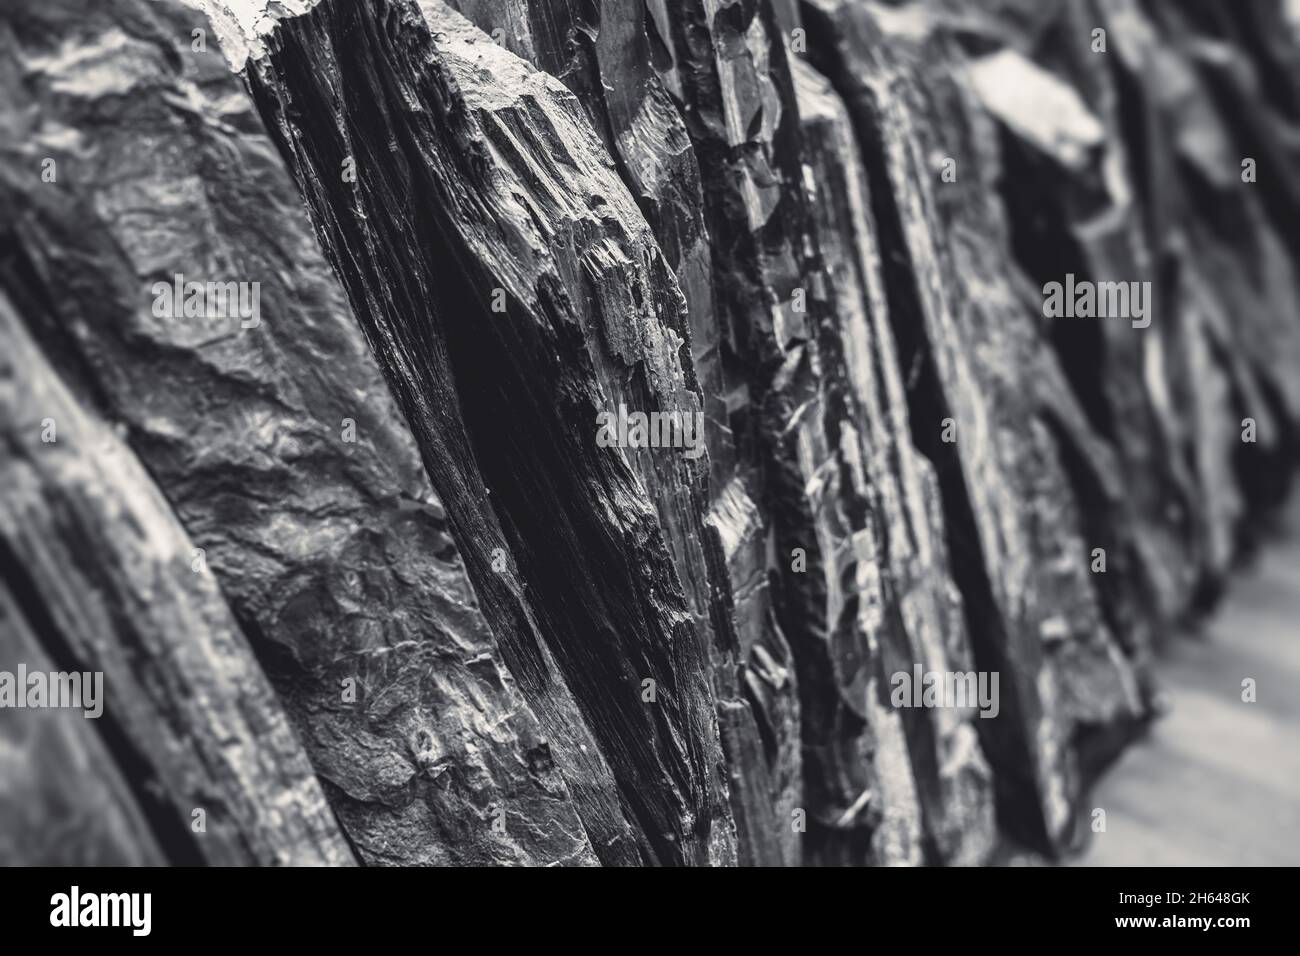 slate rock nature stone closeup layer high detail black and white tone Stock Photo